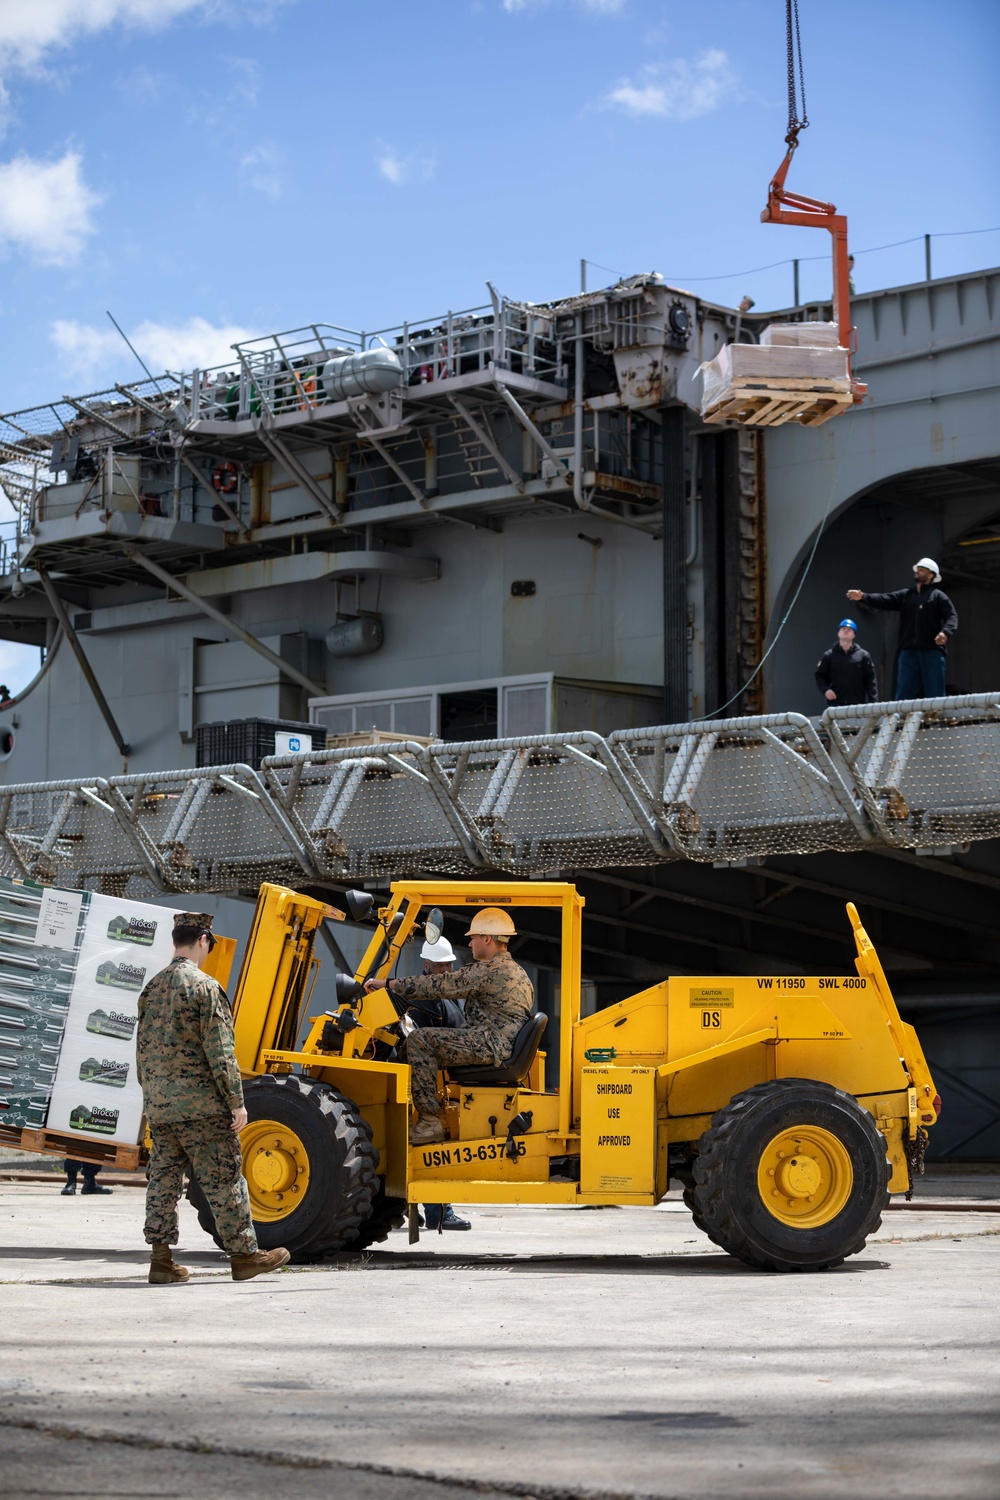 Kearsarge is in Port in Brest, France for Mid-Deployment Voyage Repairs